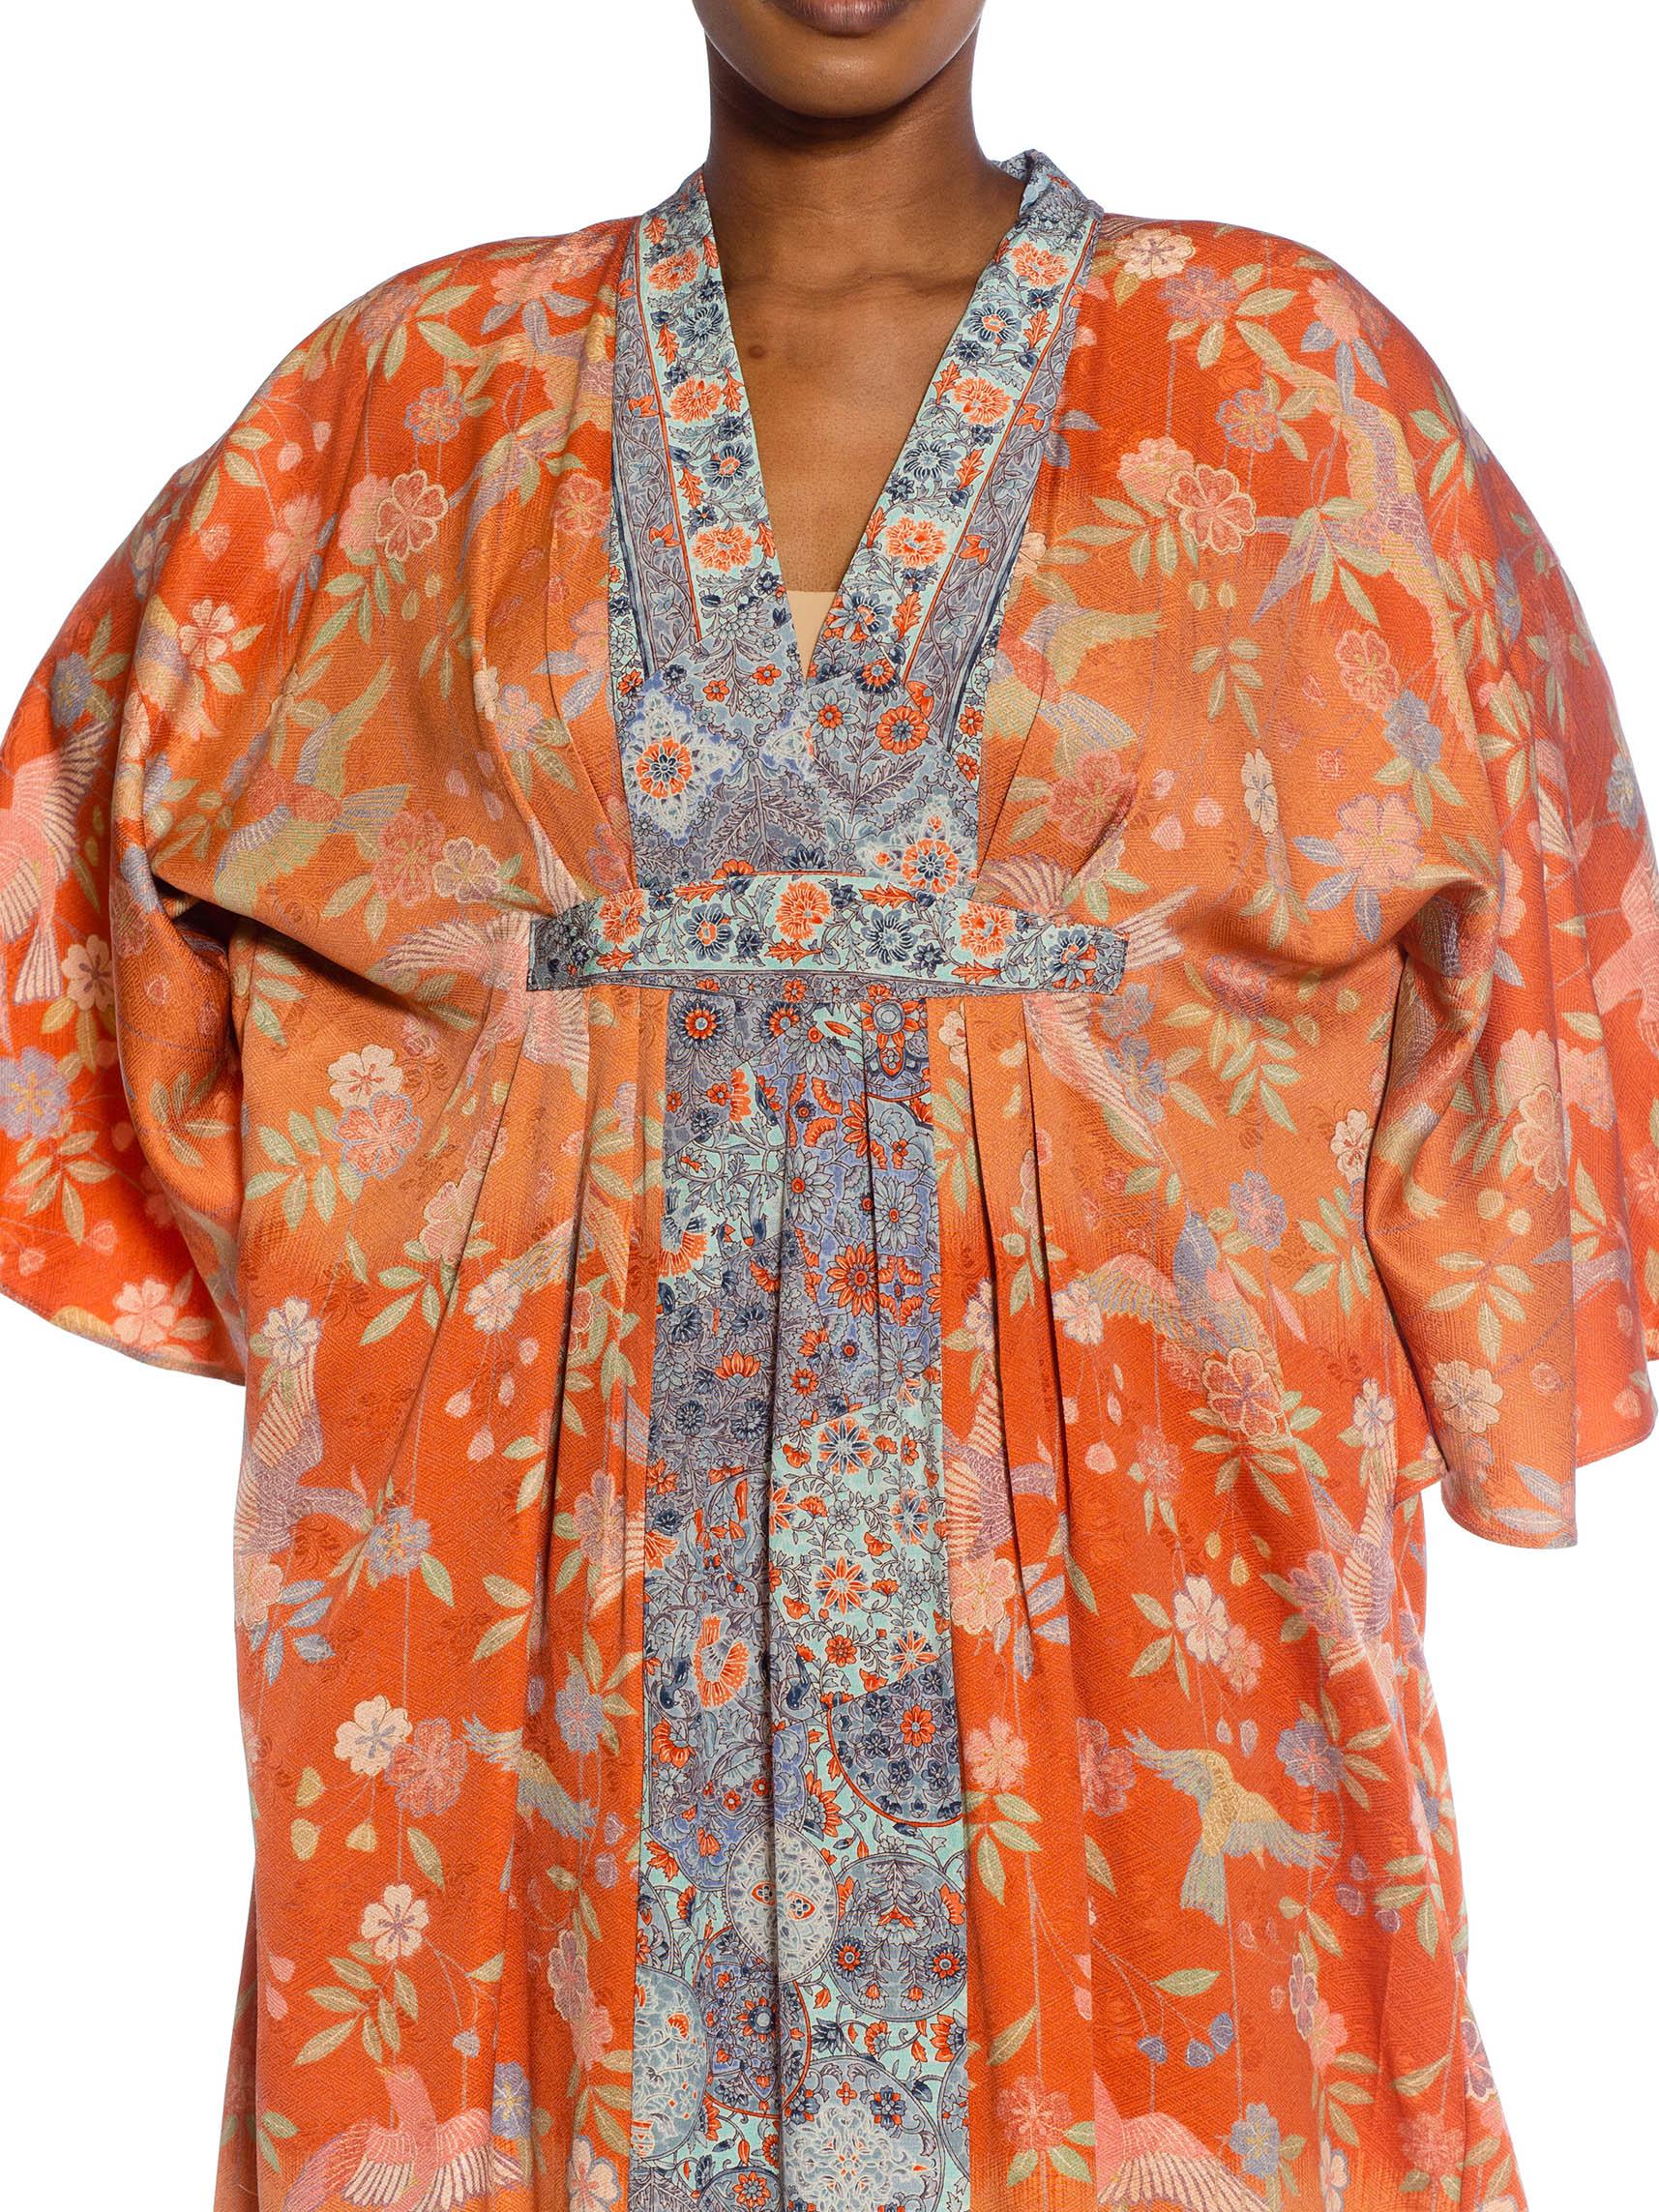 MORPHEW COLLECTION Orange Ombré Floral Japanese Kimono Silk Kaftan 5